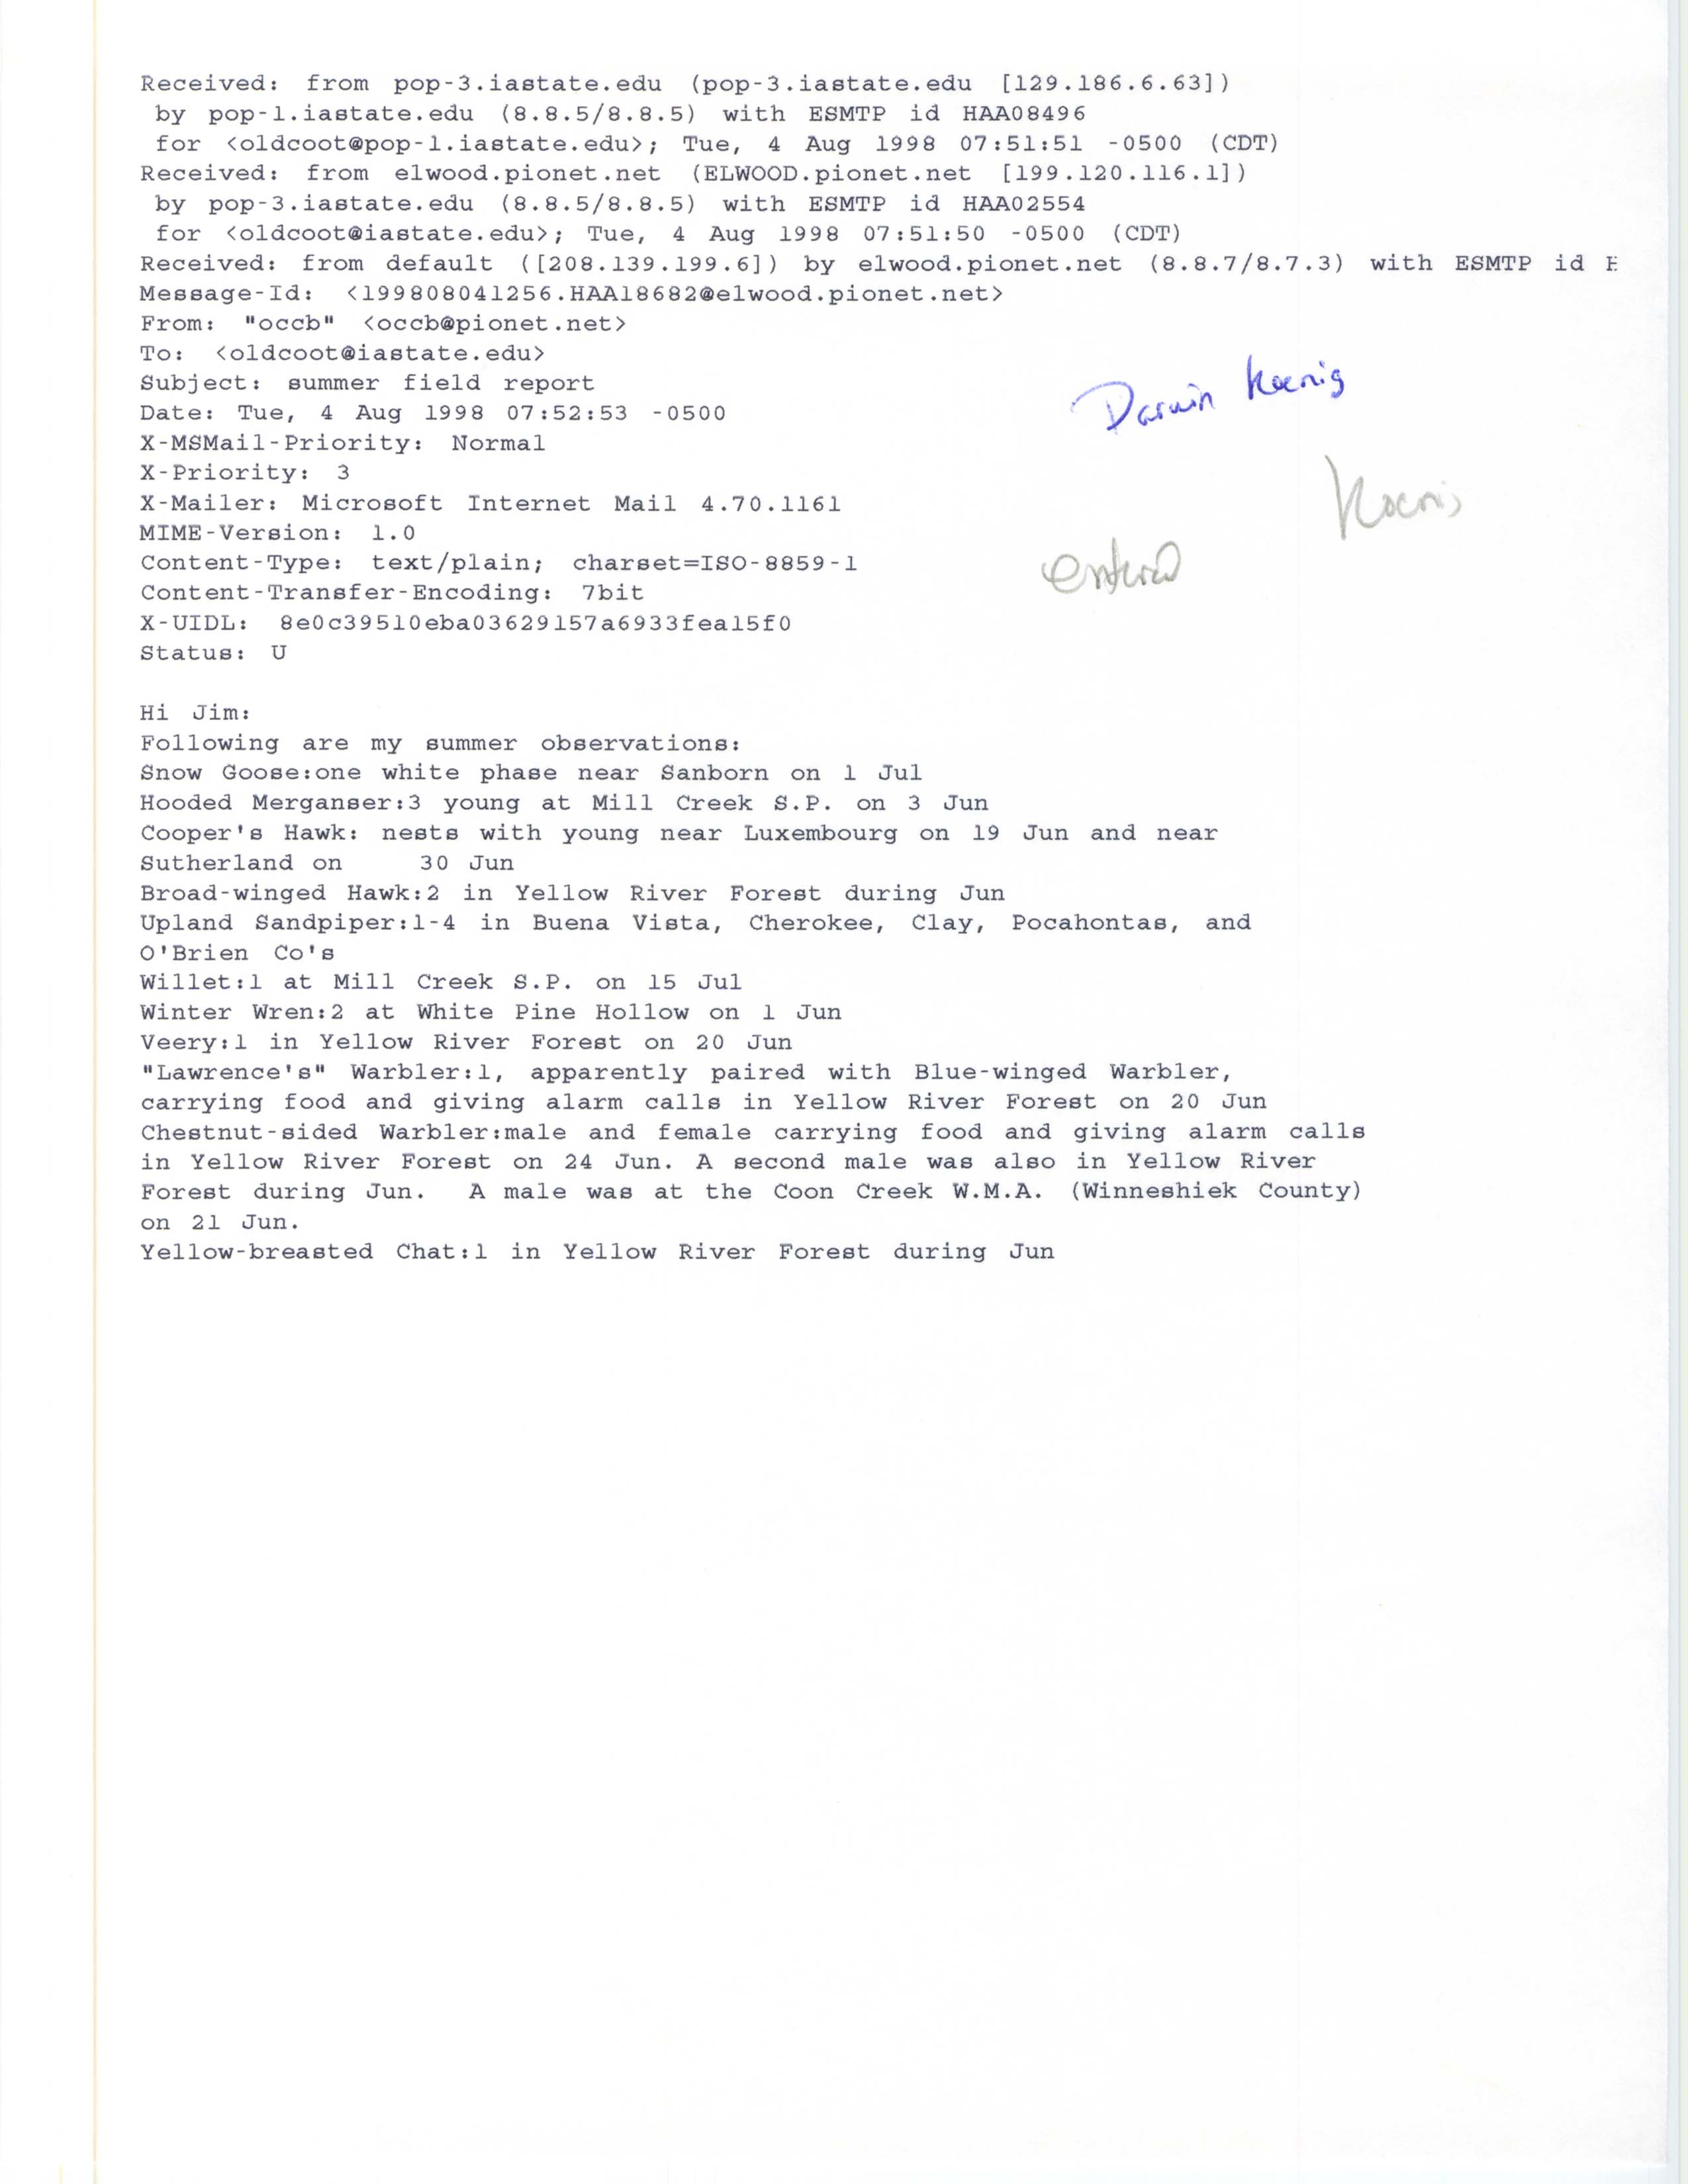 Darwin Koenig email to Jim Dinsmore regarding summer field report, August 4, 1998